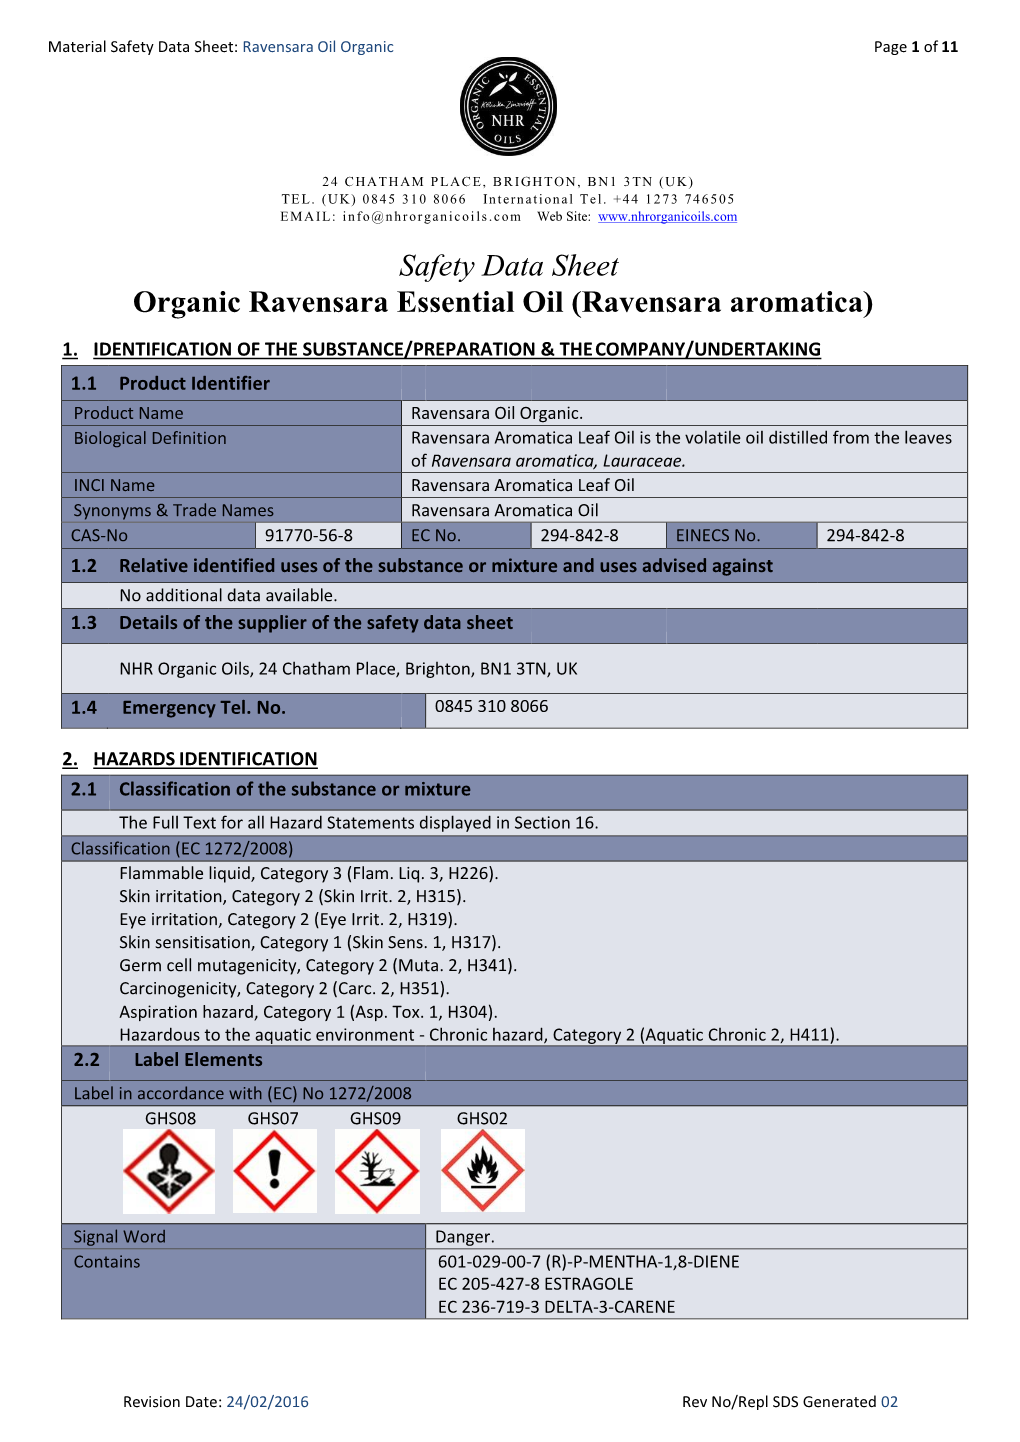 Safety Data Sheet Organic Ravensara Essential Oil (Ravensara Aromatica)